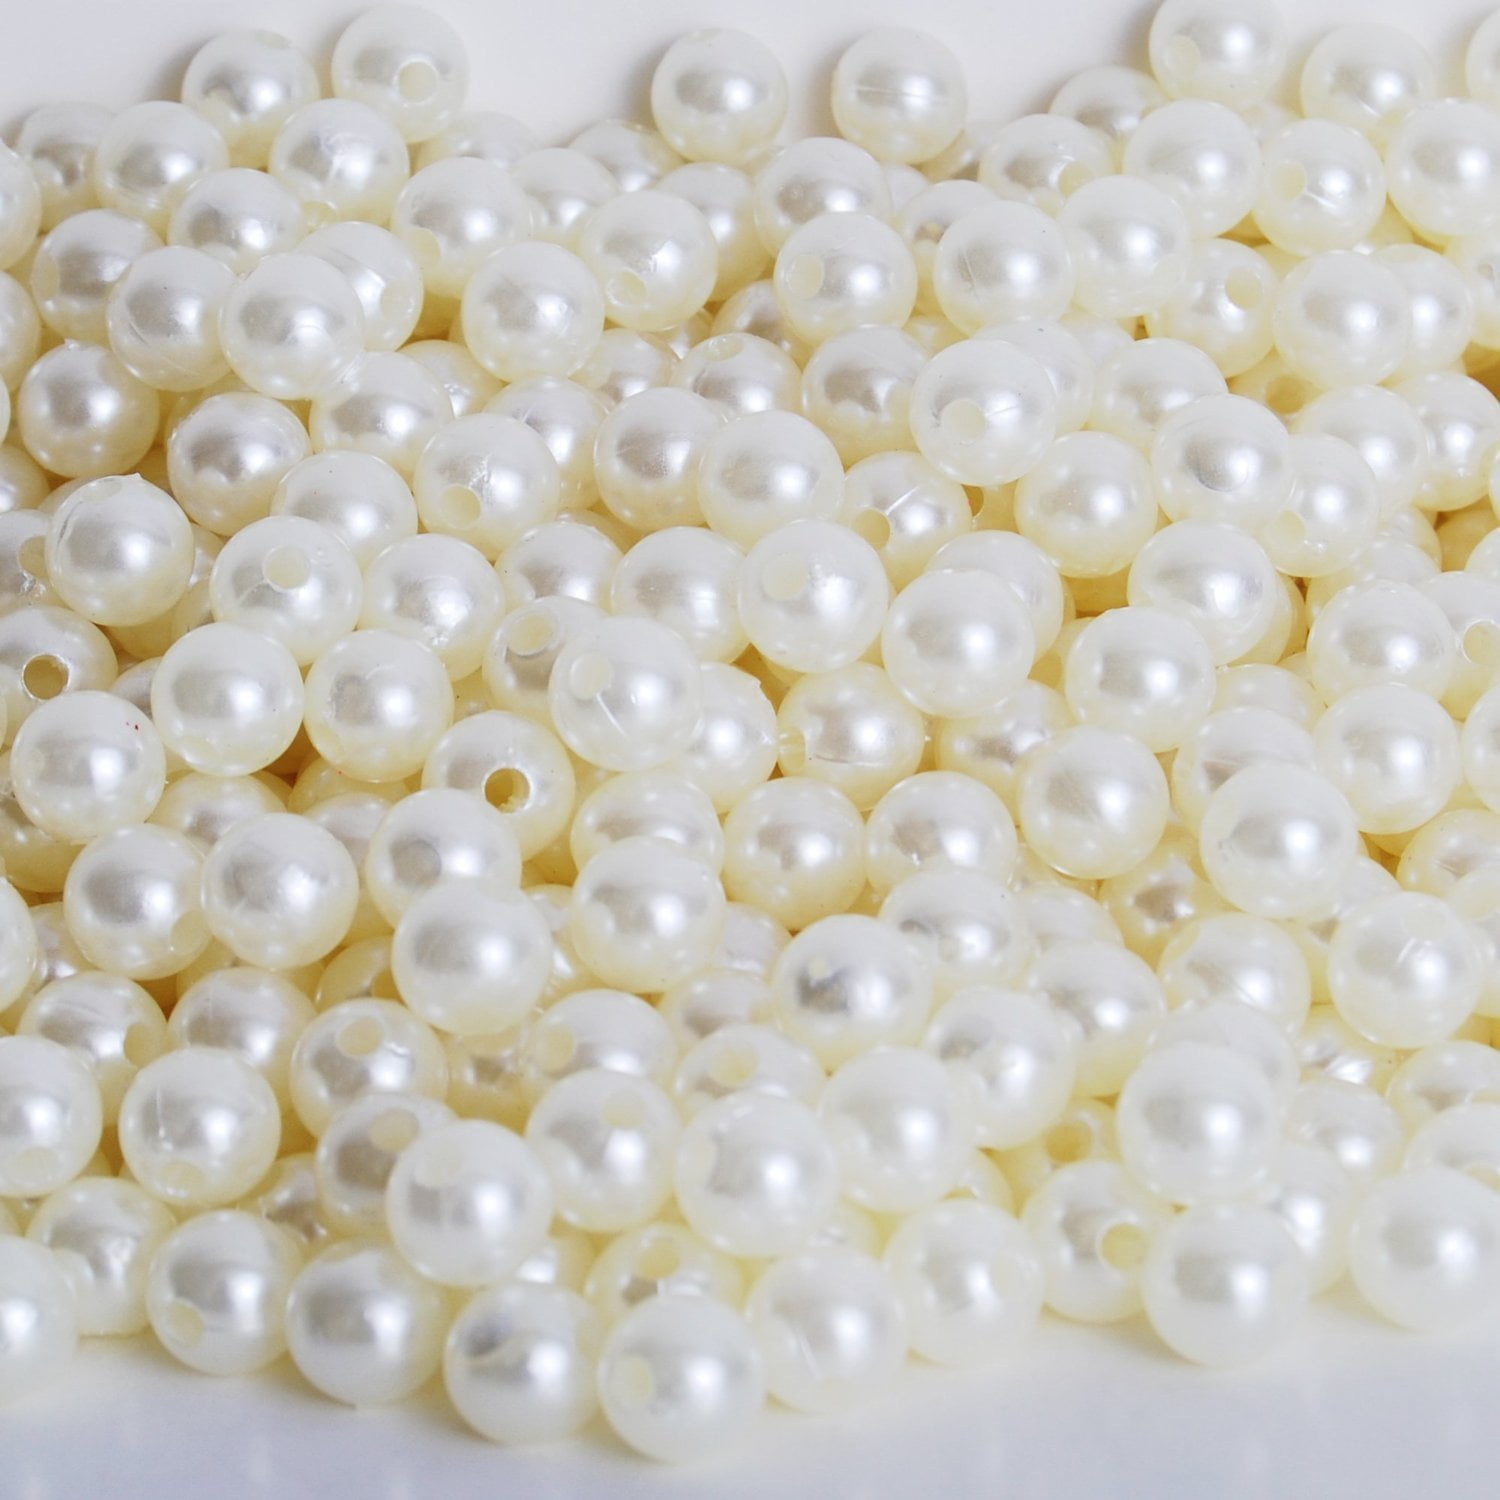 Loose Pearls Table Decor Vase Filler 10mm Ivory  3 Pounds pack 